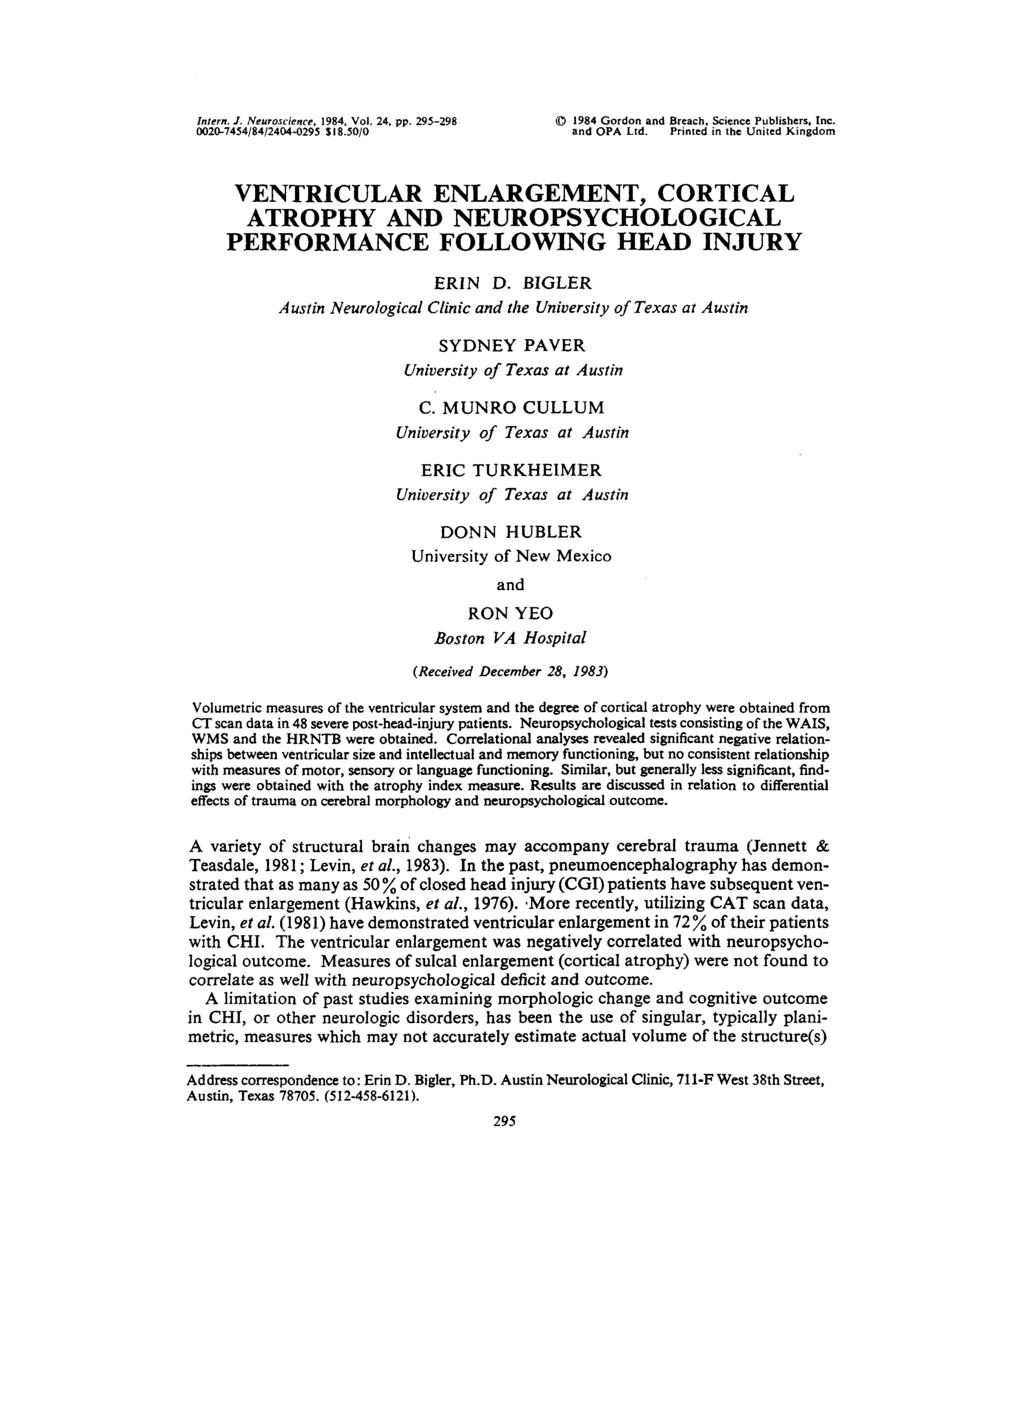 Infern. 1. Neuroscience. 1984. Vol. 24. pp. 295-298 0020-74S4/84/2404-0295 5 18.50/0 Q 1984 Gordon and Breach, Science Publishers, Inc. and OPA Ltd.